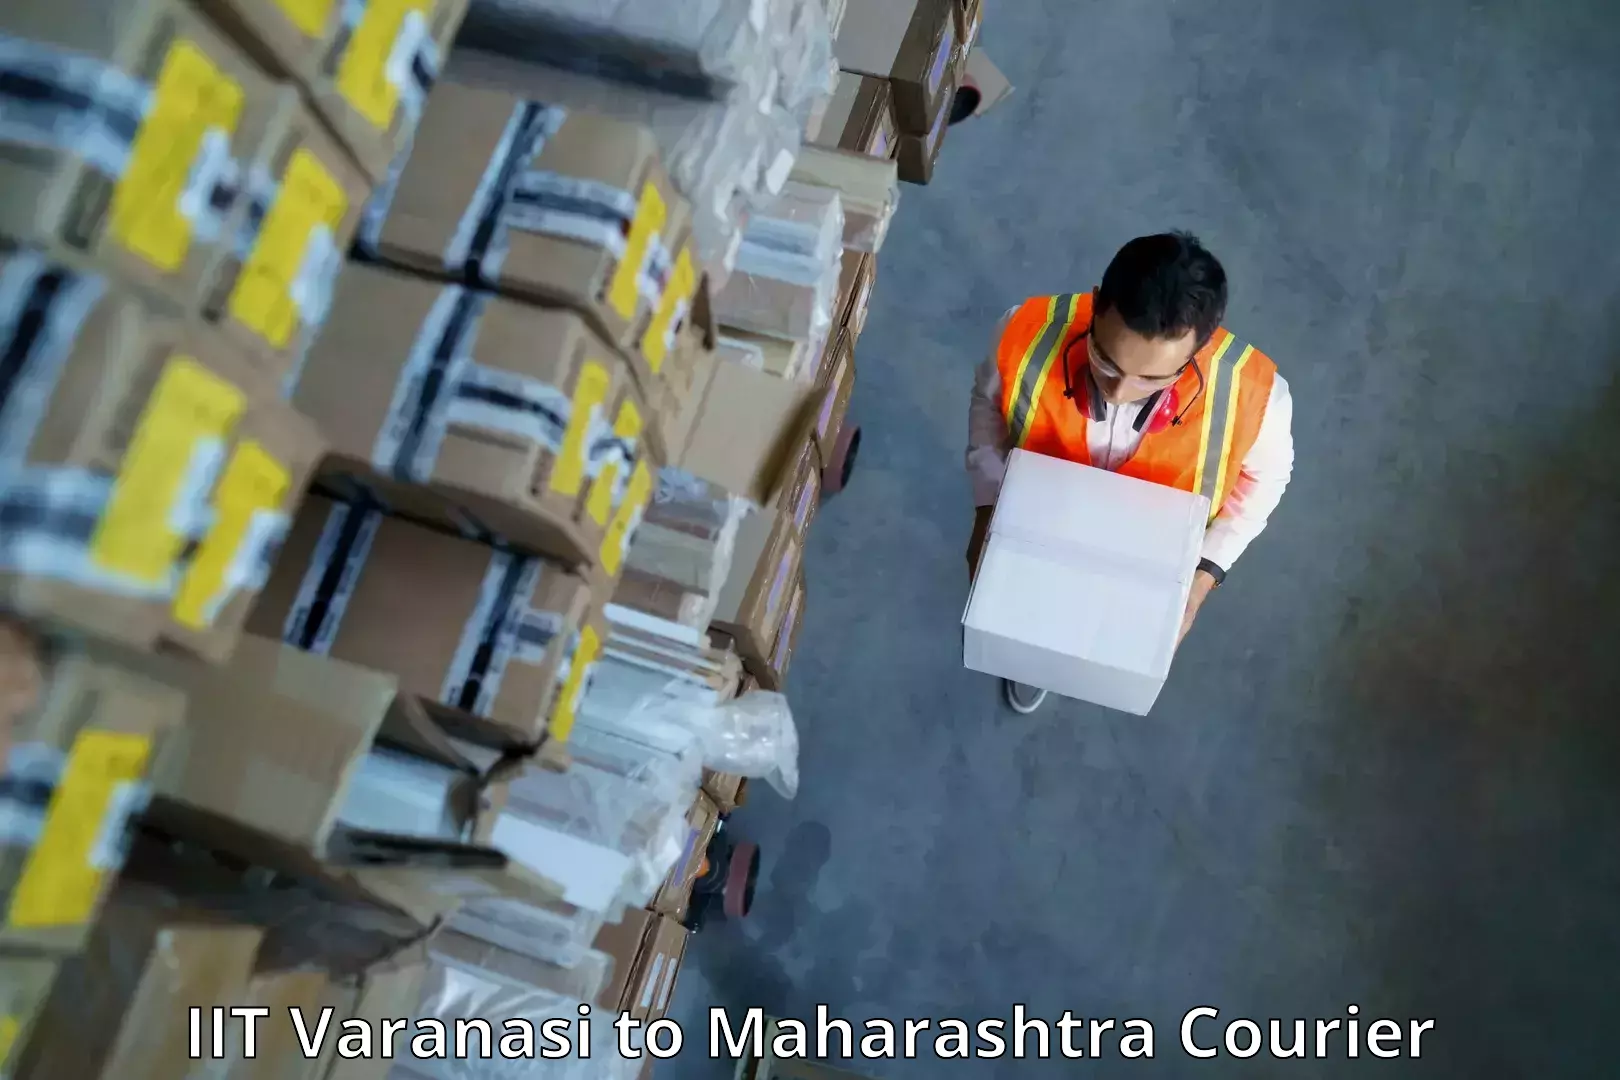 Speedy delivery service IIT Varanasi to Karmala